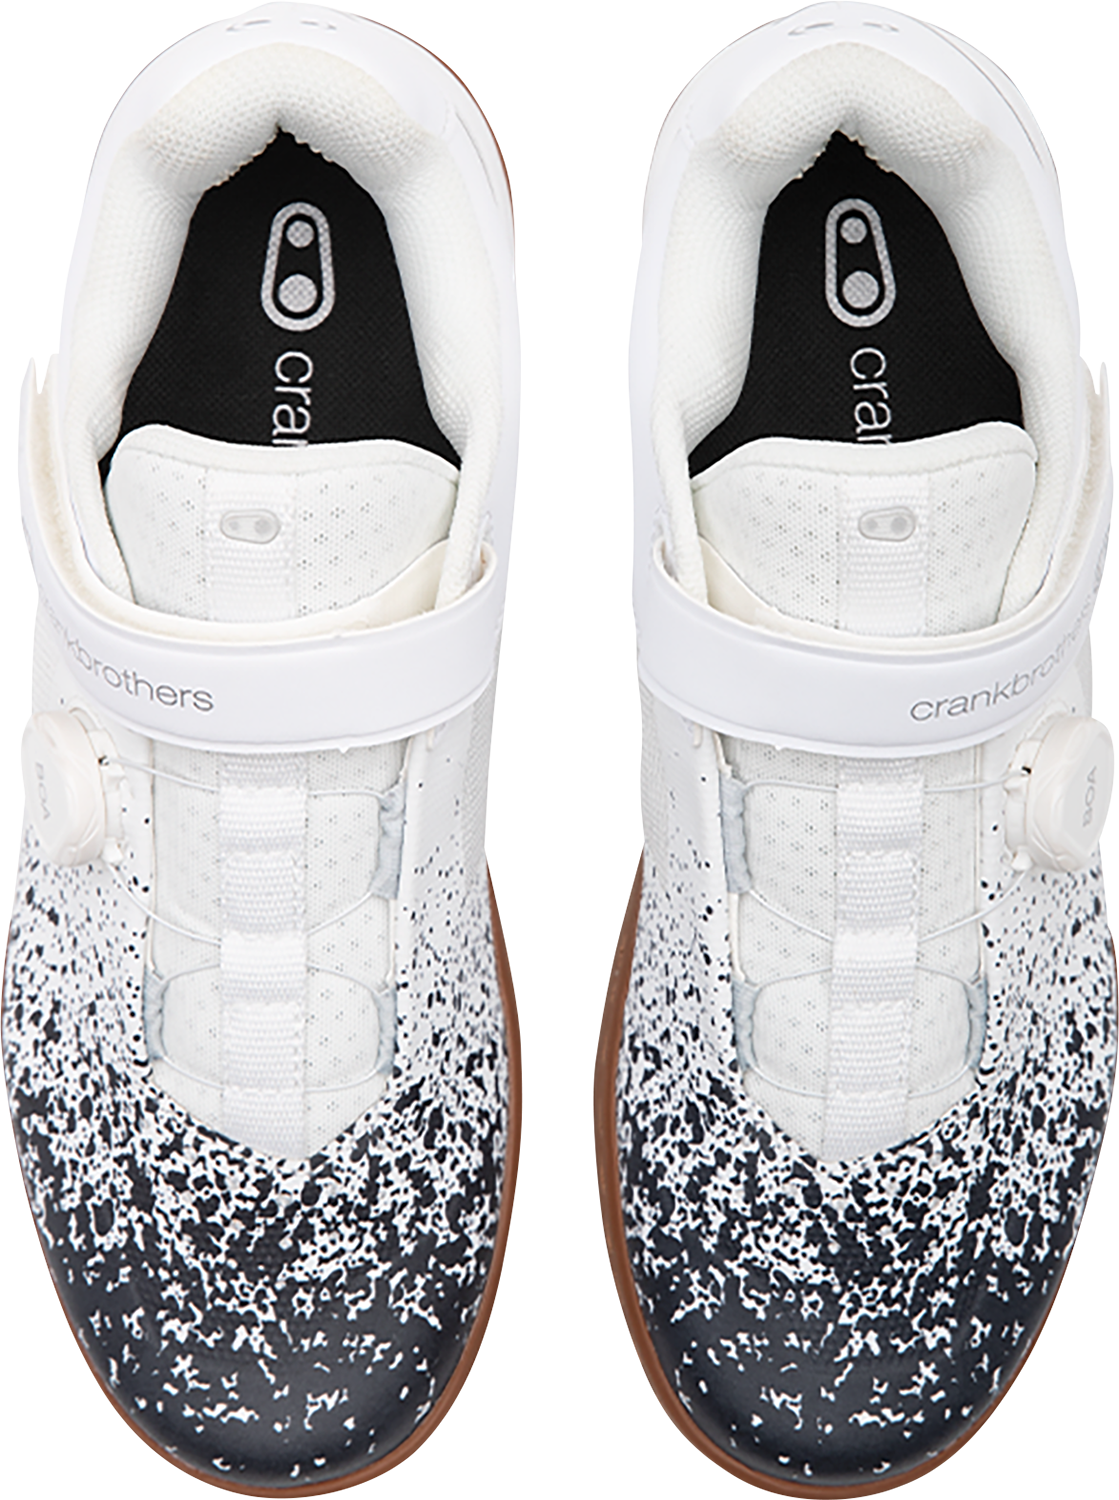 Stamp BOA® Shoes - Black/White - US 11.5